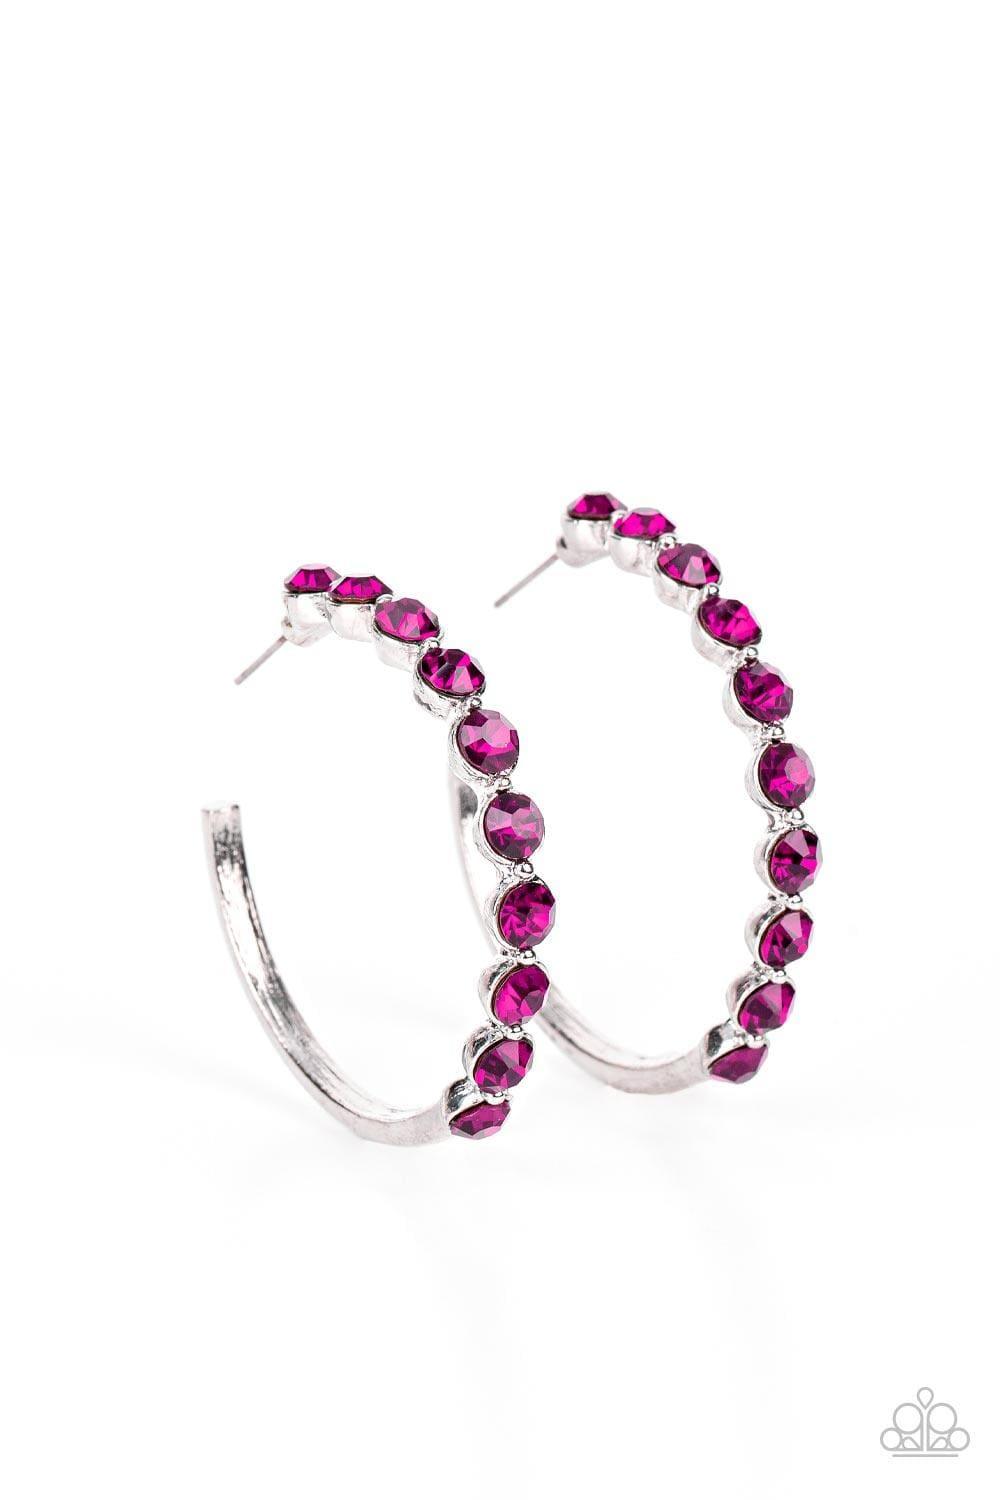 Paparazzi Accessories - Photo Finish - Pink Hoop Earrings - Bling by JessieK